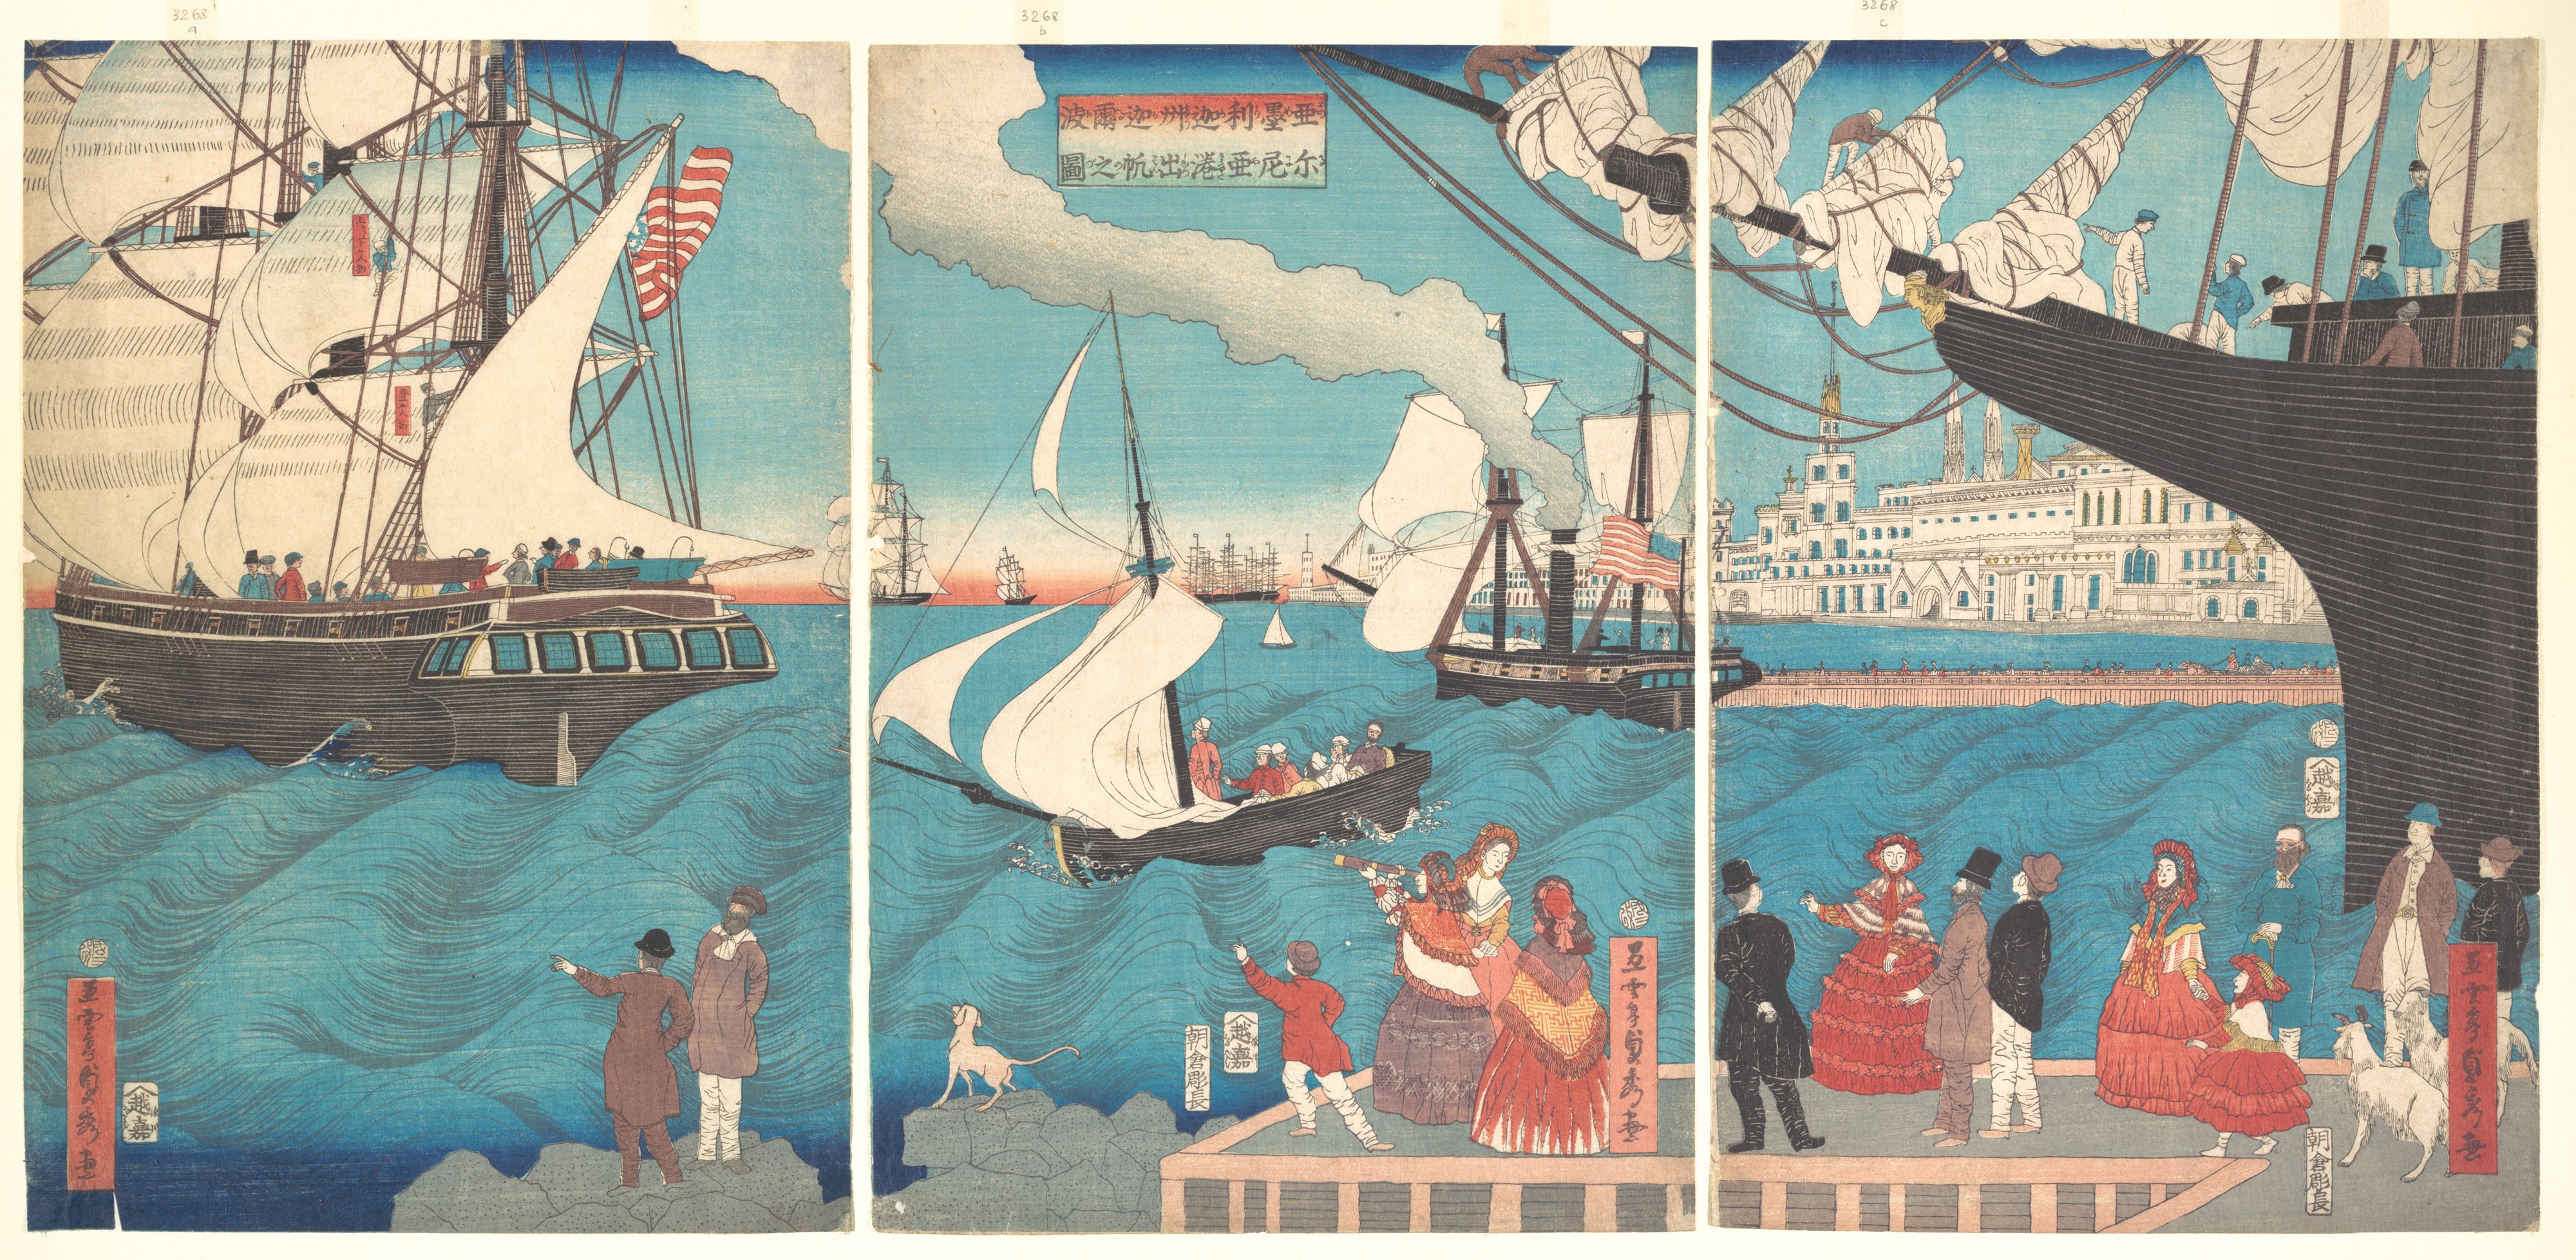 Gountei Sadahide Ships Sailing from a California Port, 1862